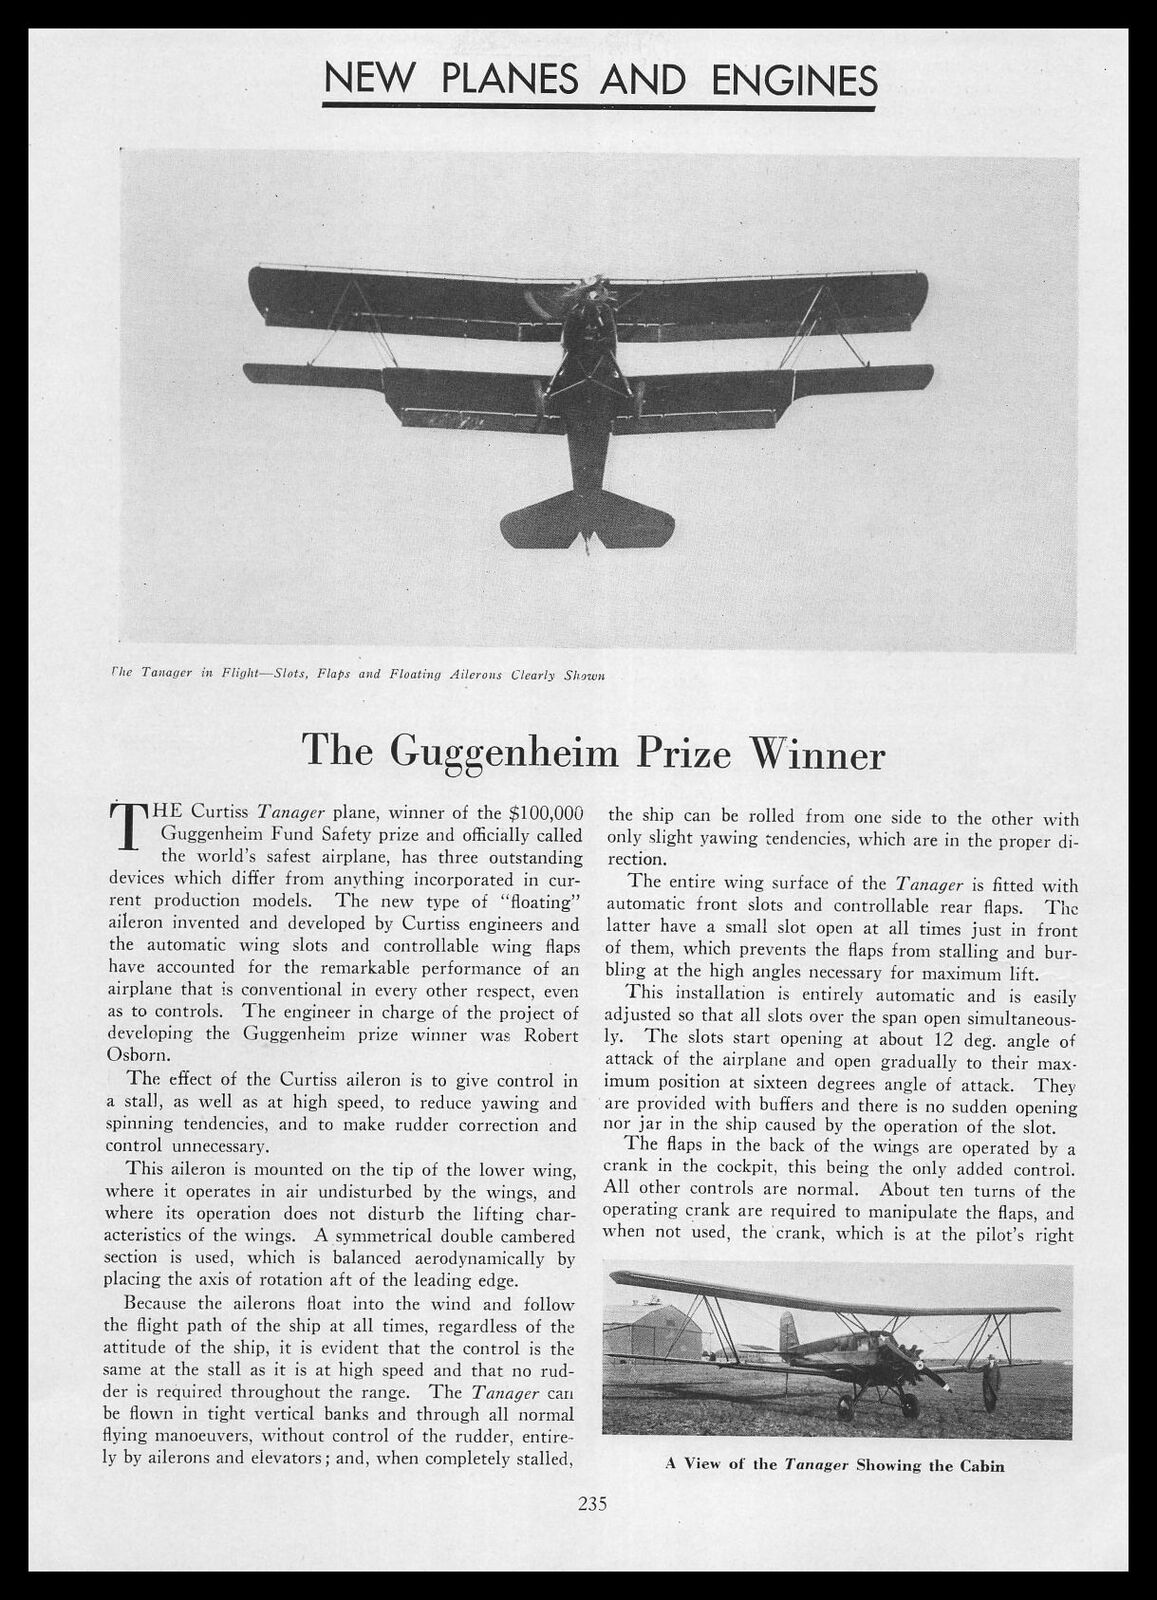 1930 Curtiss Tanager Photos Robert Osborn Wins Guggenheim Prize Article Print Ad